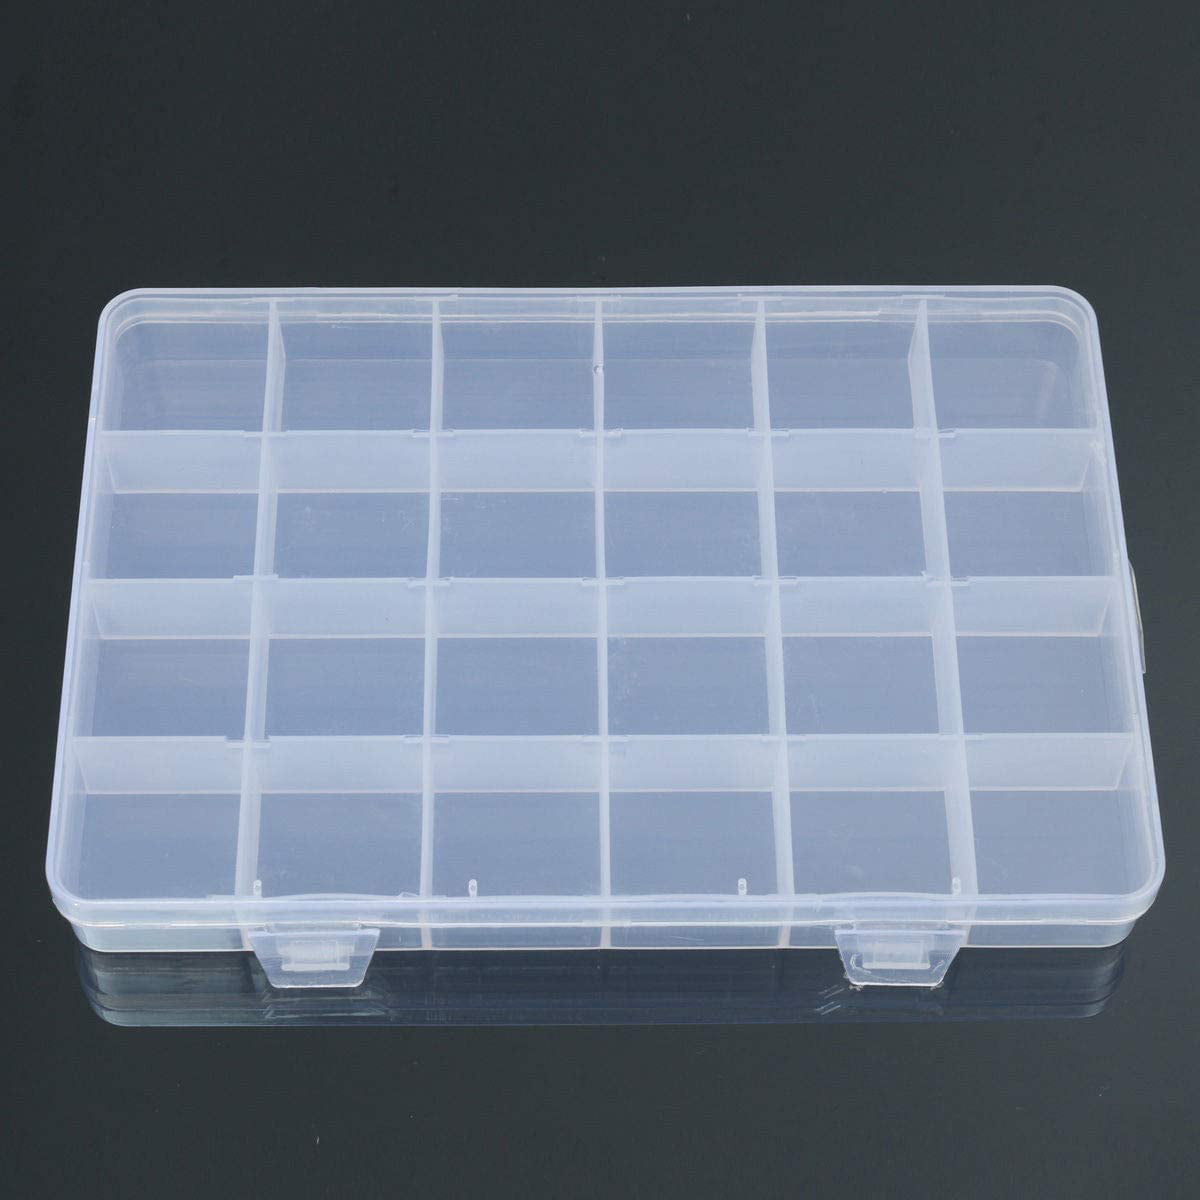 24 Compartments Plastic Case Box Jewelry Bead Storage Organizer Container Craft 